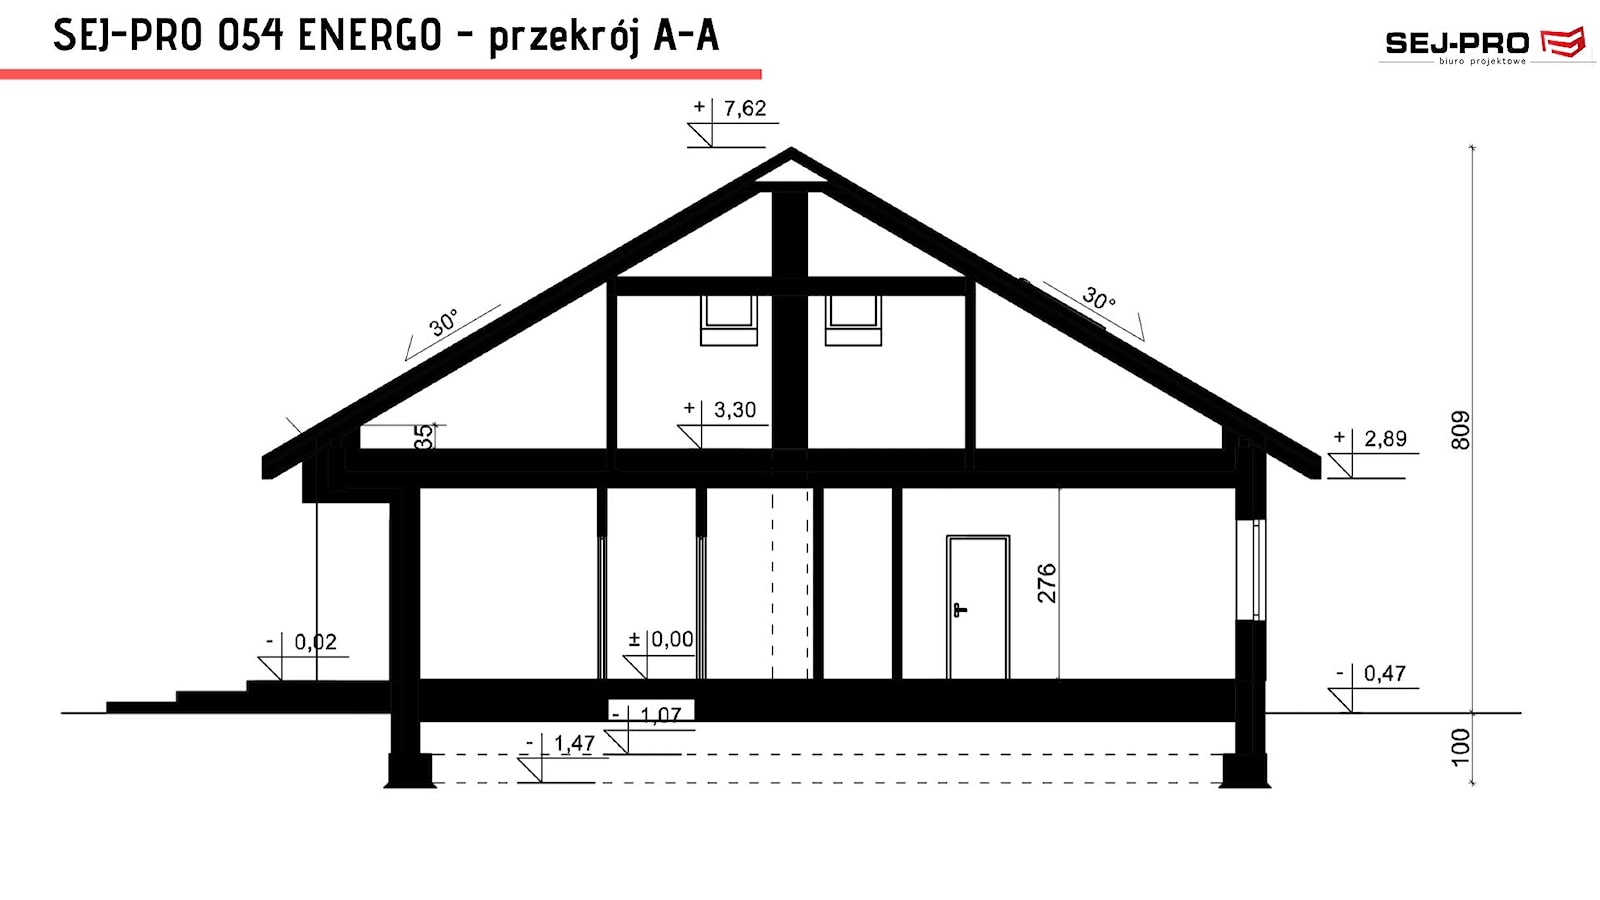 SEJ-PRO 054 ENERGO - zdjęcie od SEJPRO Biuro Projektowe - Homebook